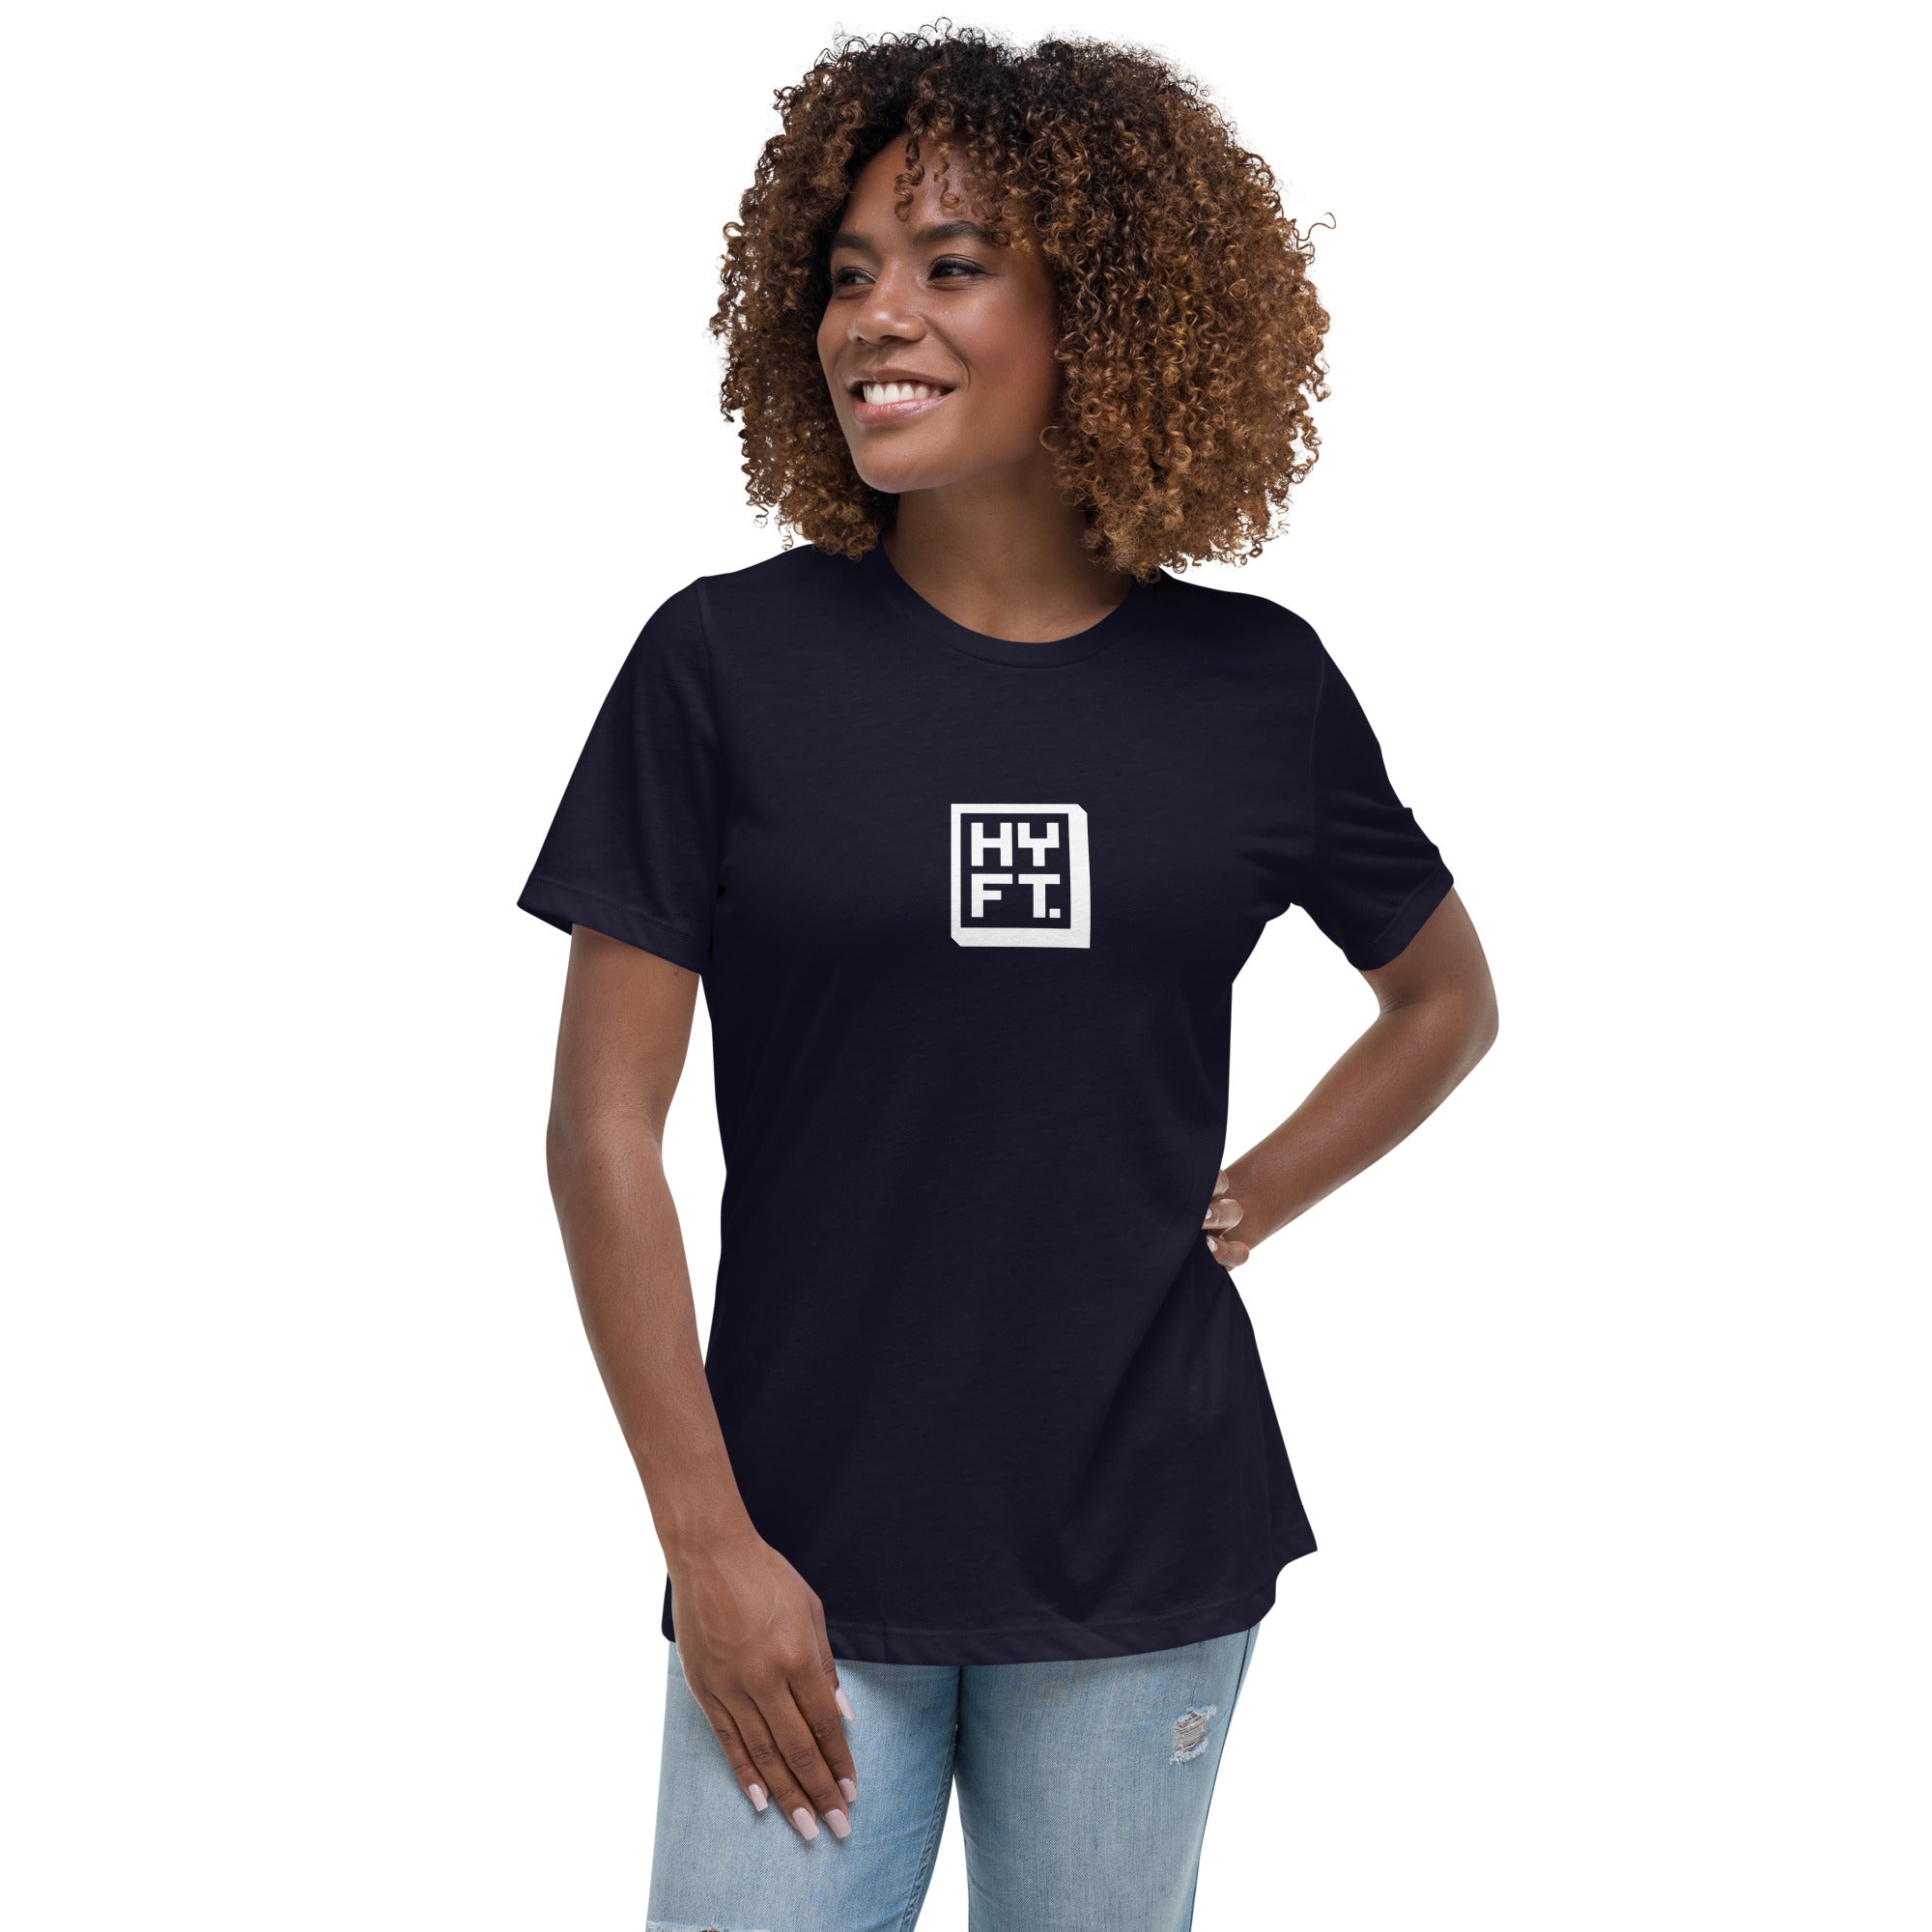 Hoye Fit Boxed Logo - Dark Shirts with White Print